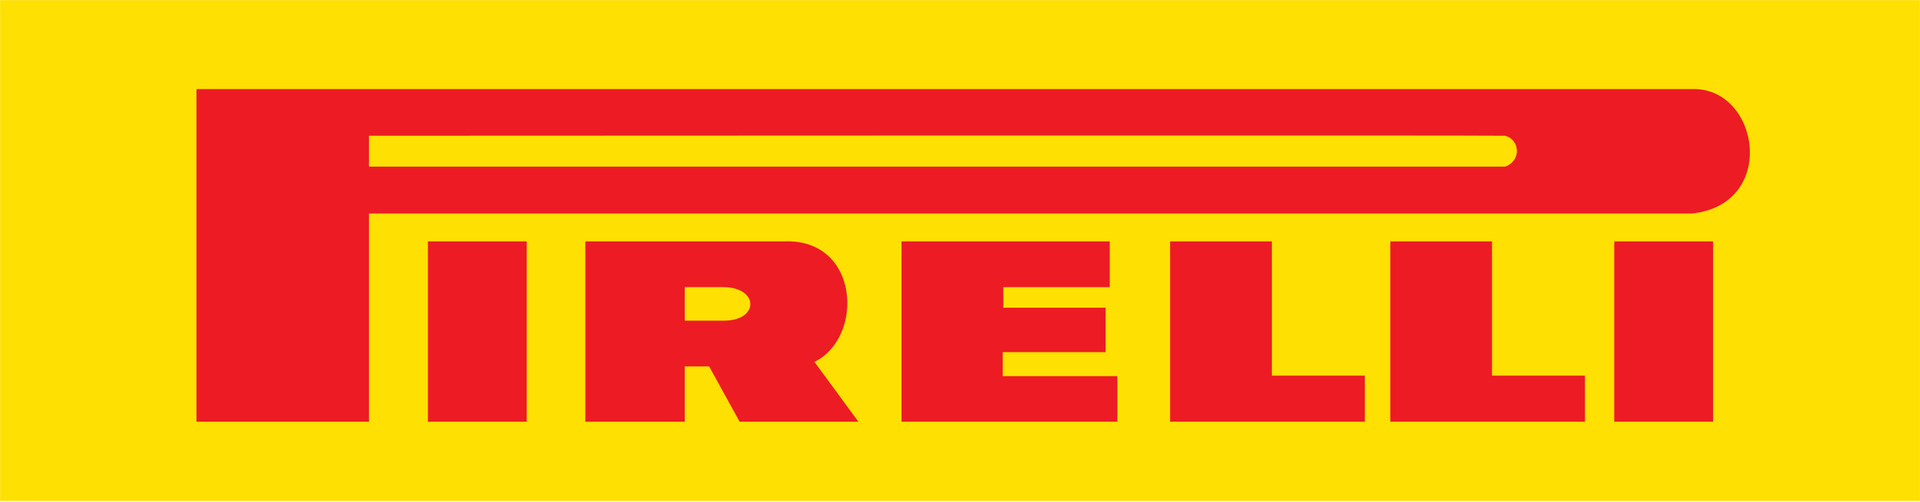 Pirelli Logo | Gold Wing Motors